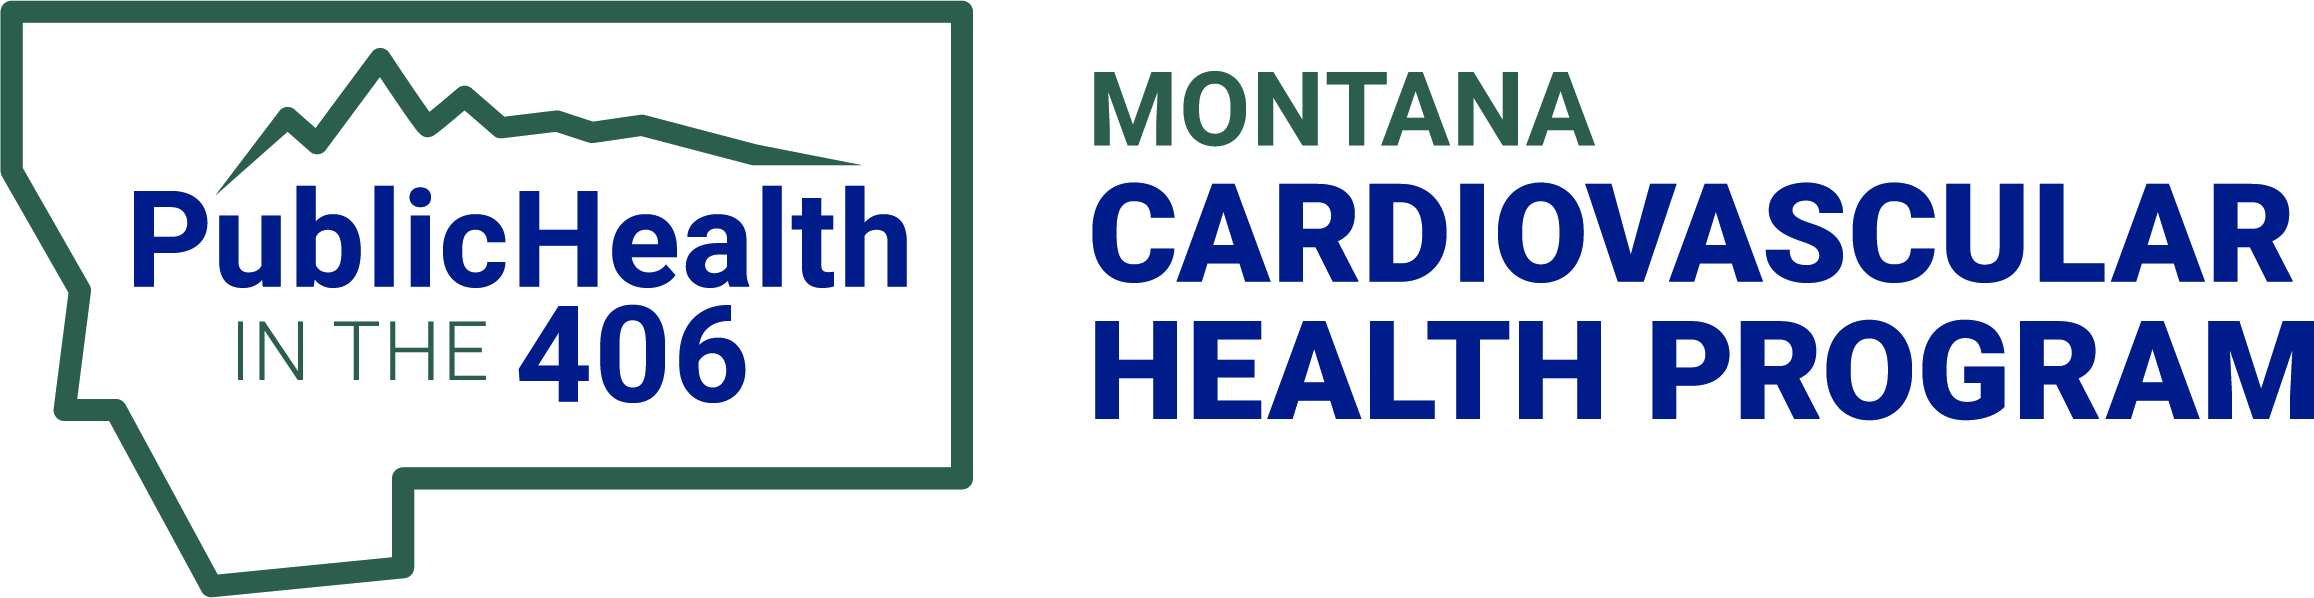 montana-cardiovascula-health-programjpegph406_mt_cardiovascular_health_program_logo_cmyk.jpg